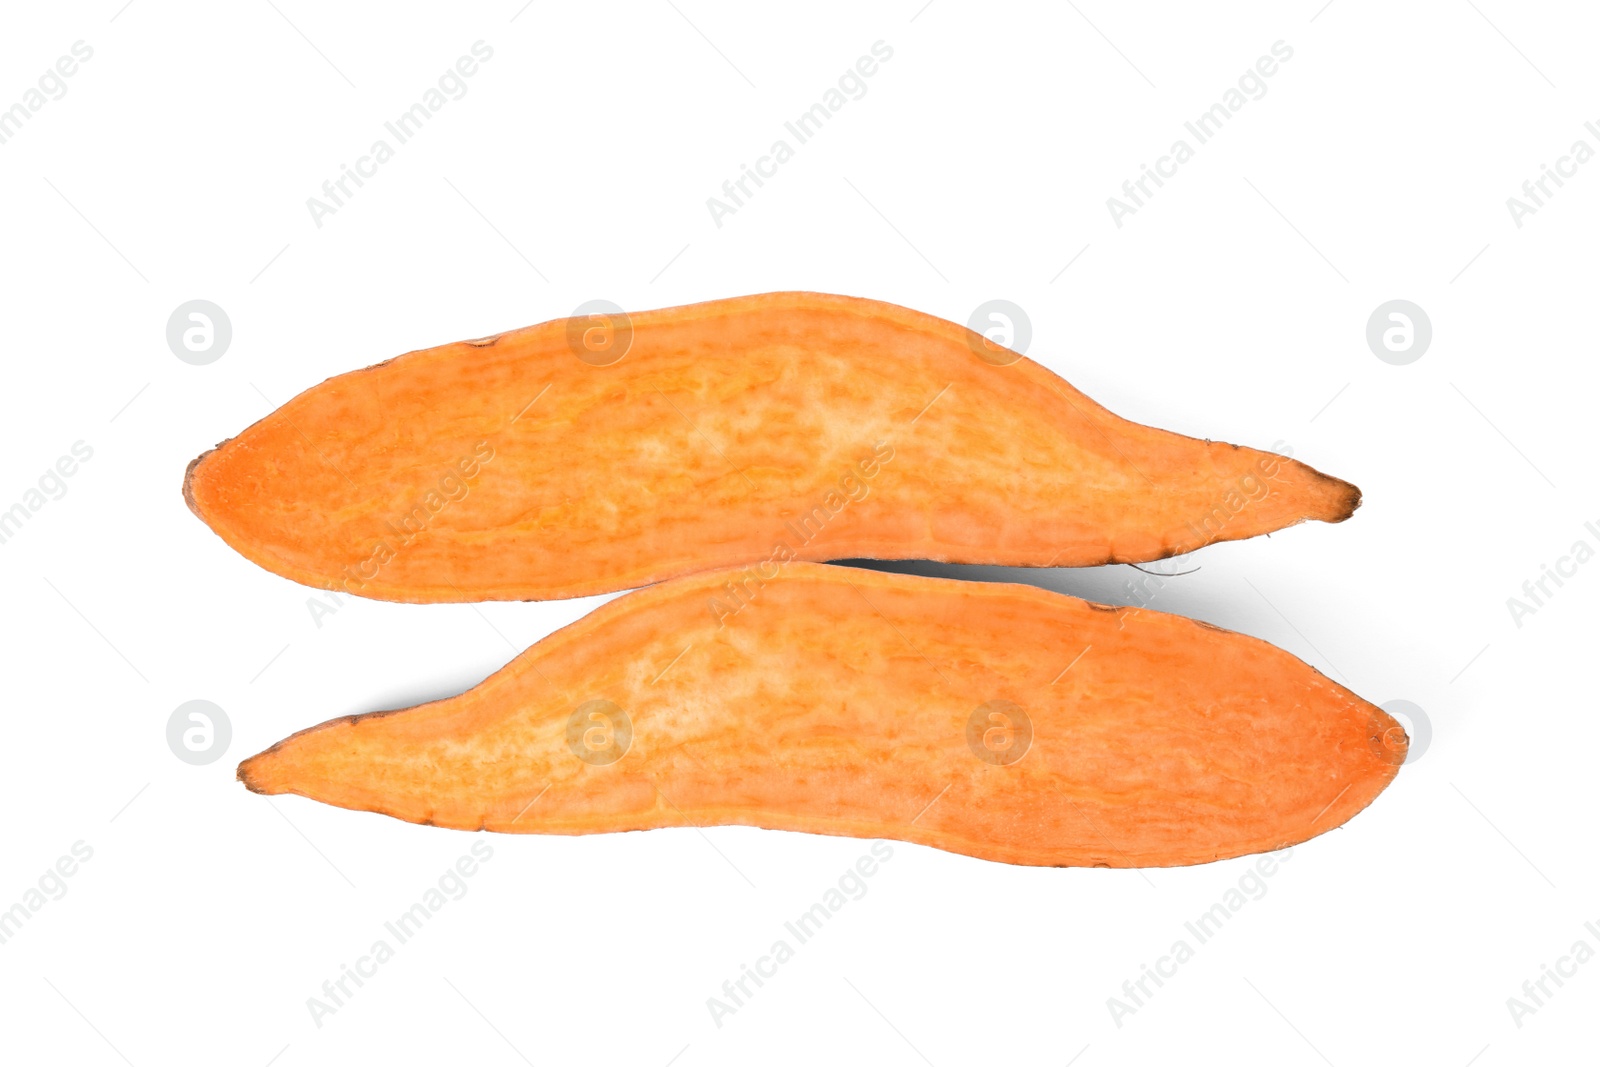 Photo of Cut fresh sweet potato on white background, top view